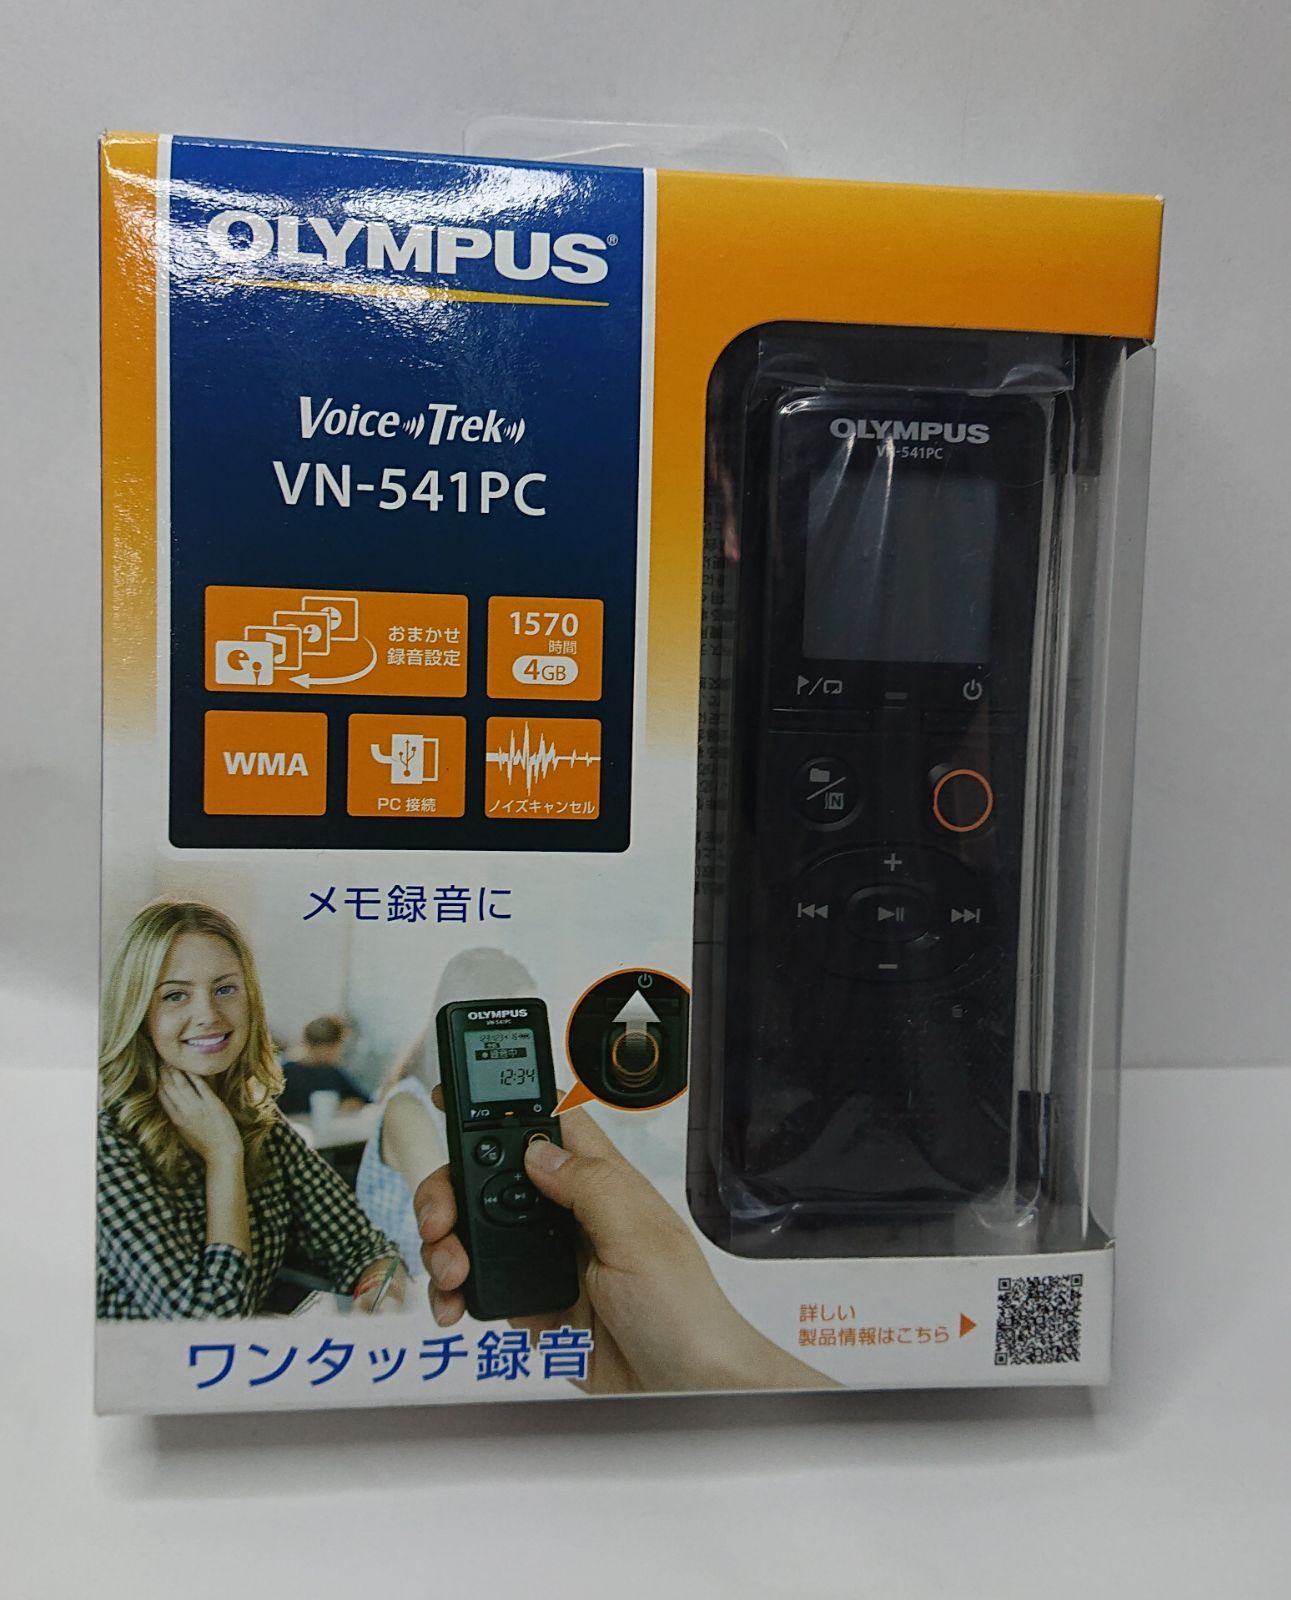 OLYMPUS ICレコーダー VoiceTrek VN-541PC - Shop C - メルカリ